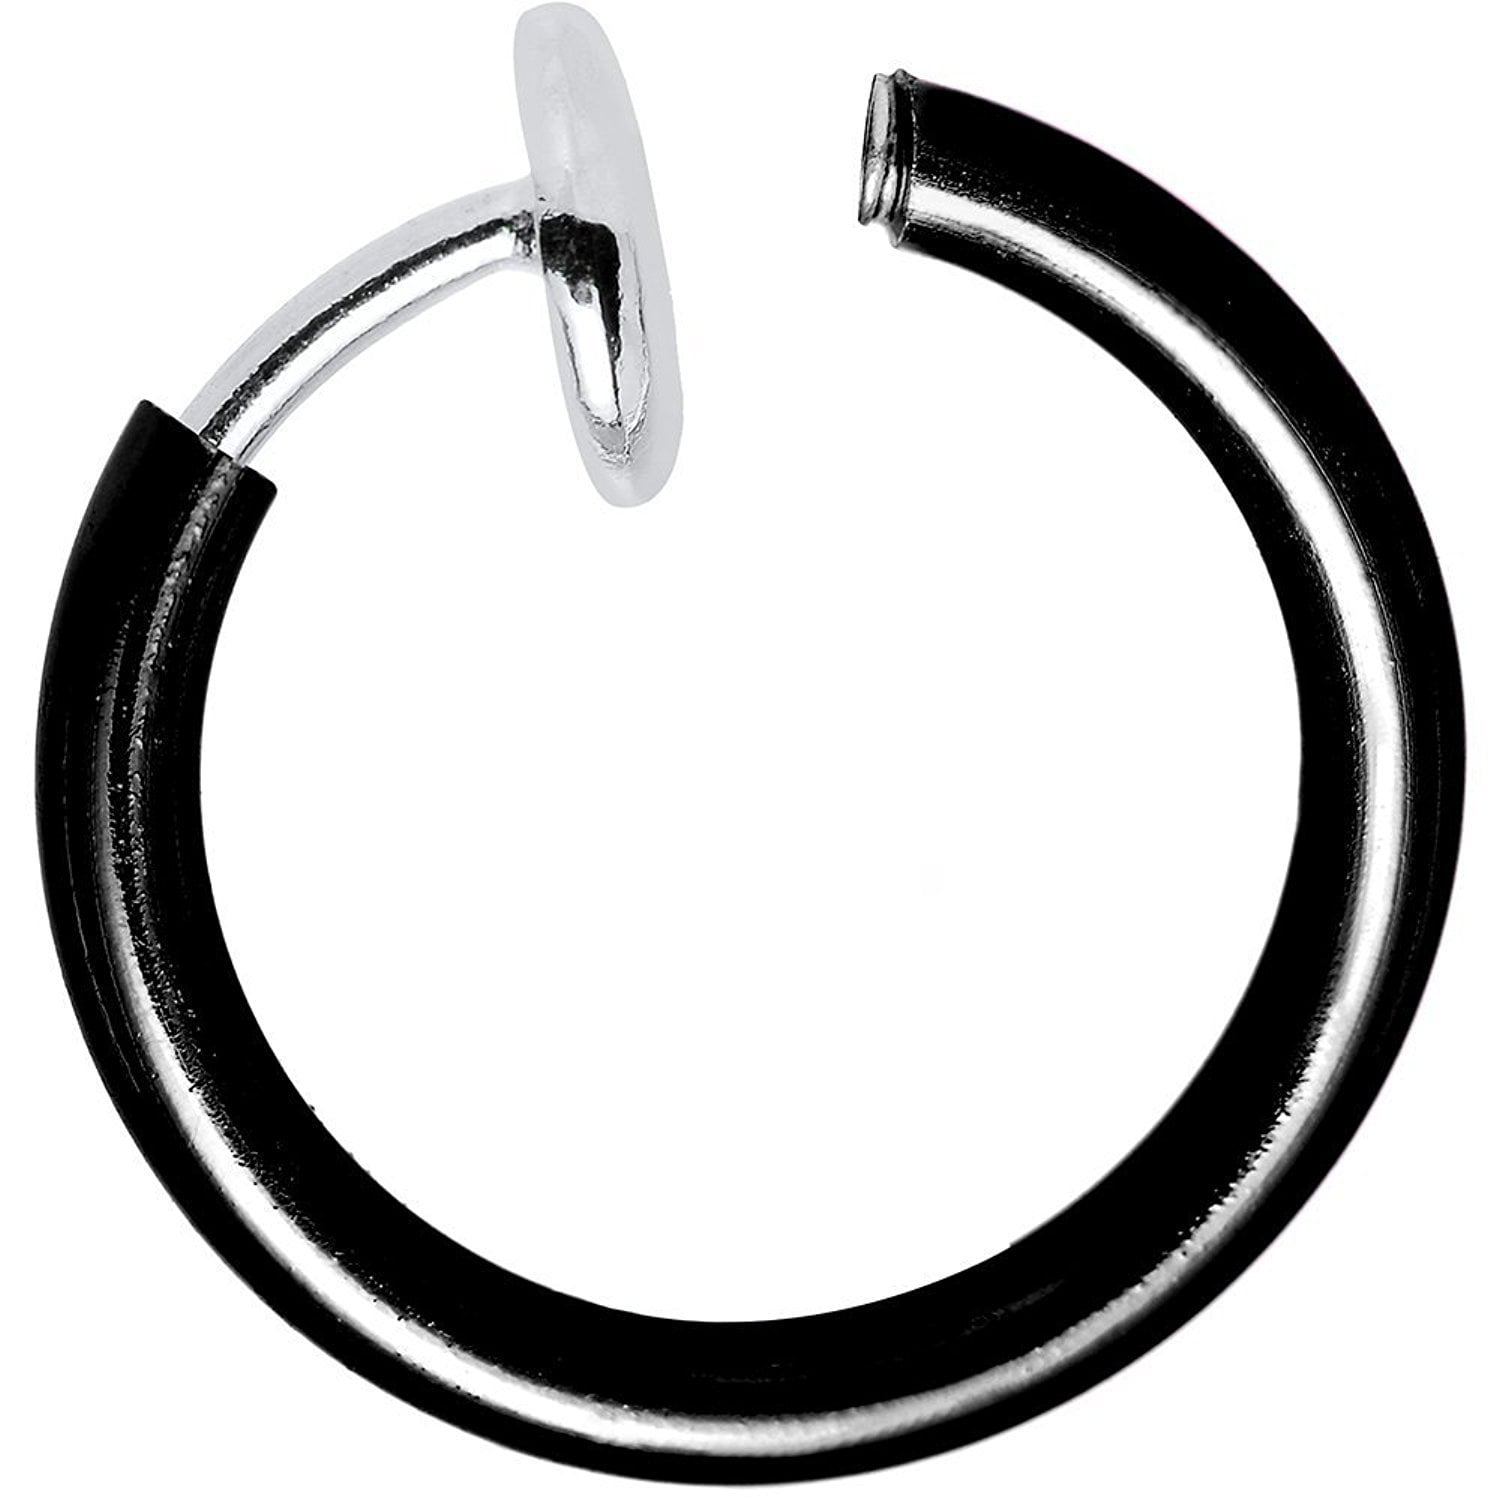 Special offers painless piercings 8 clip on plastic hoop that glow in the dark